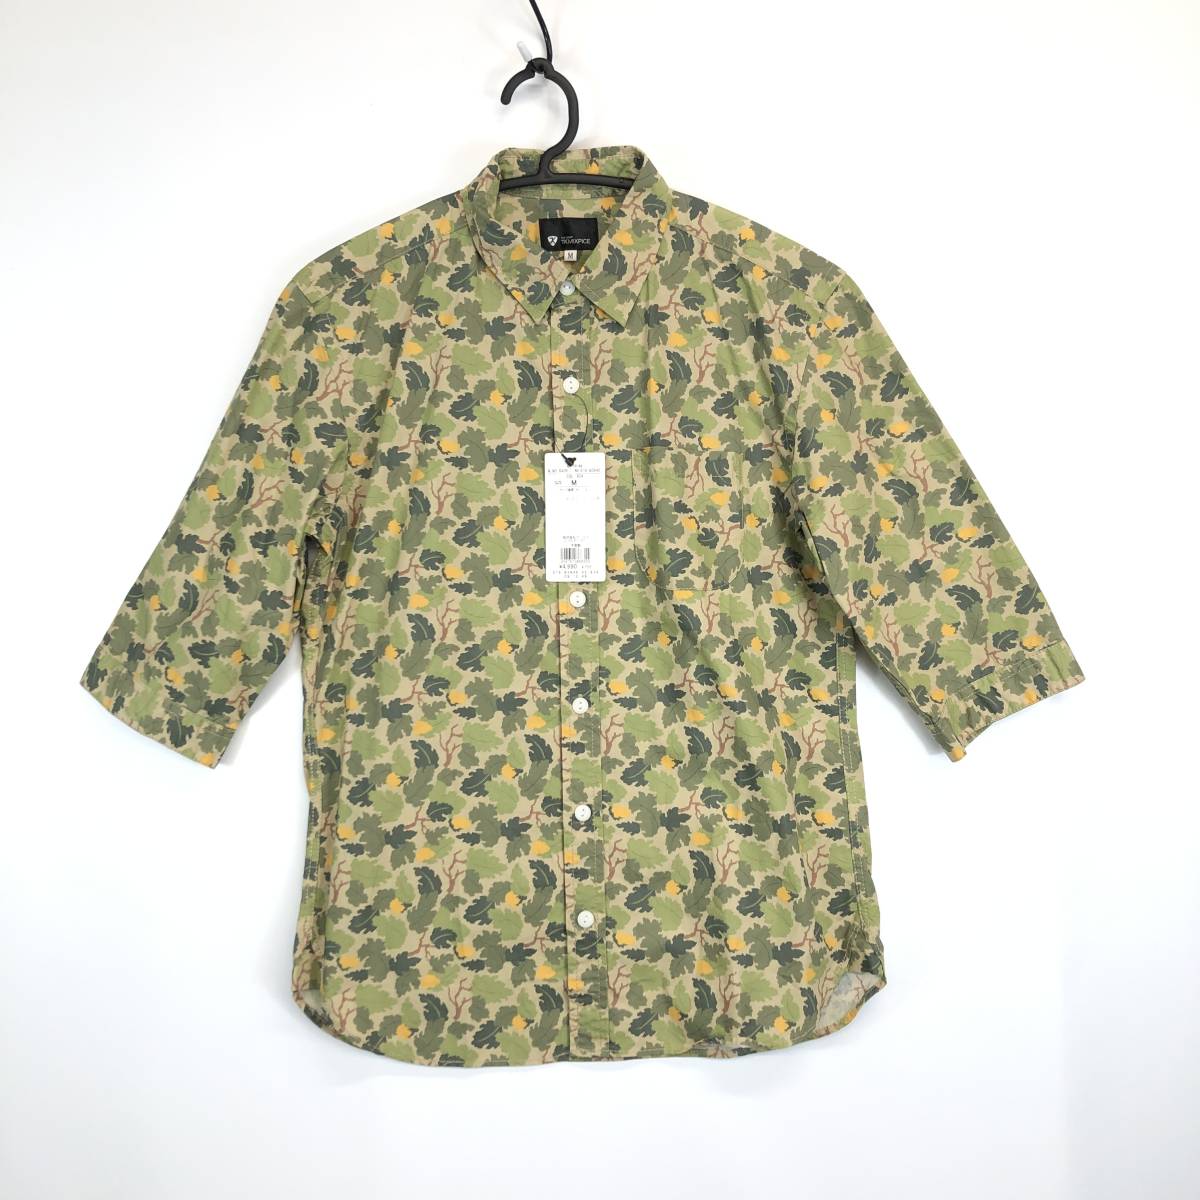  unused Takeo Kikuchi TAKEO KIKUCHI TKMIXPICE short sleeves button shirt camouflage pattern cotton M size 